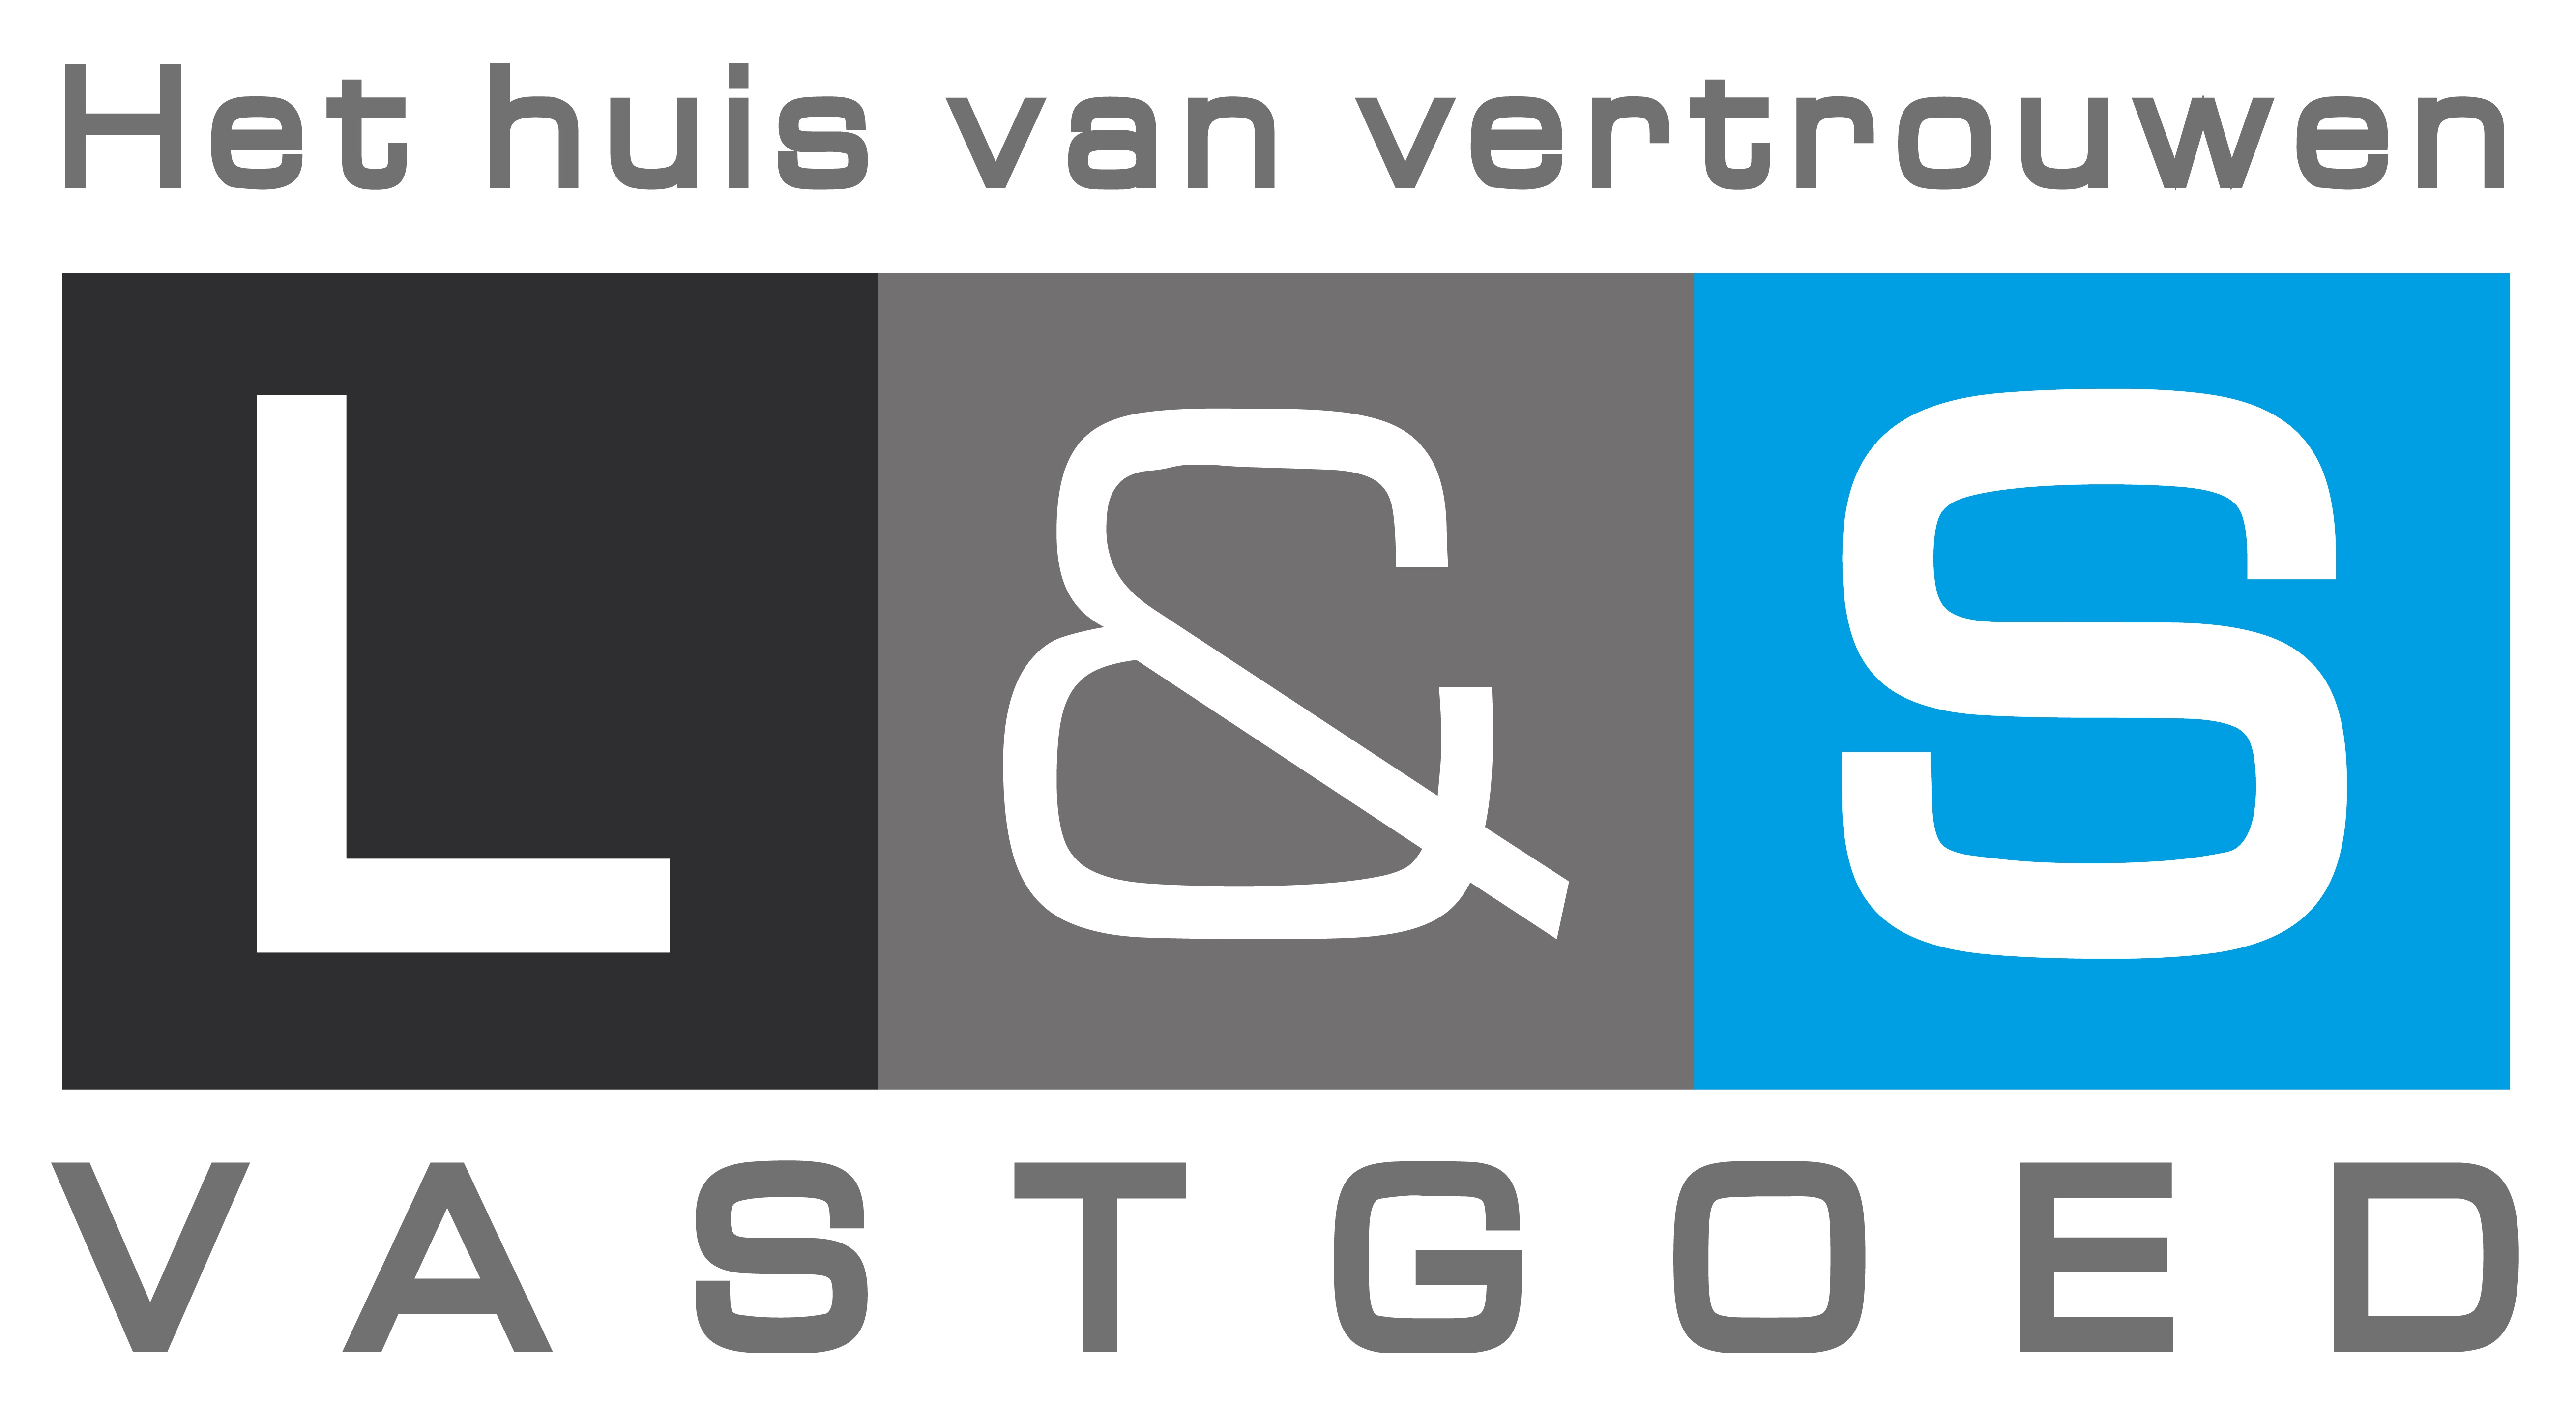 L&S Vastgoed logo